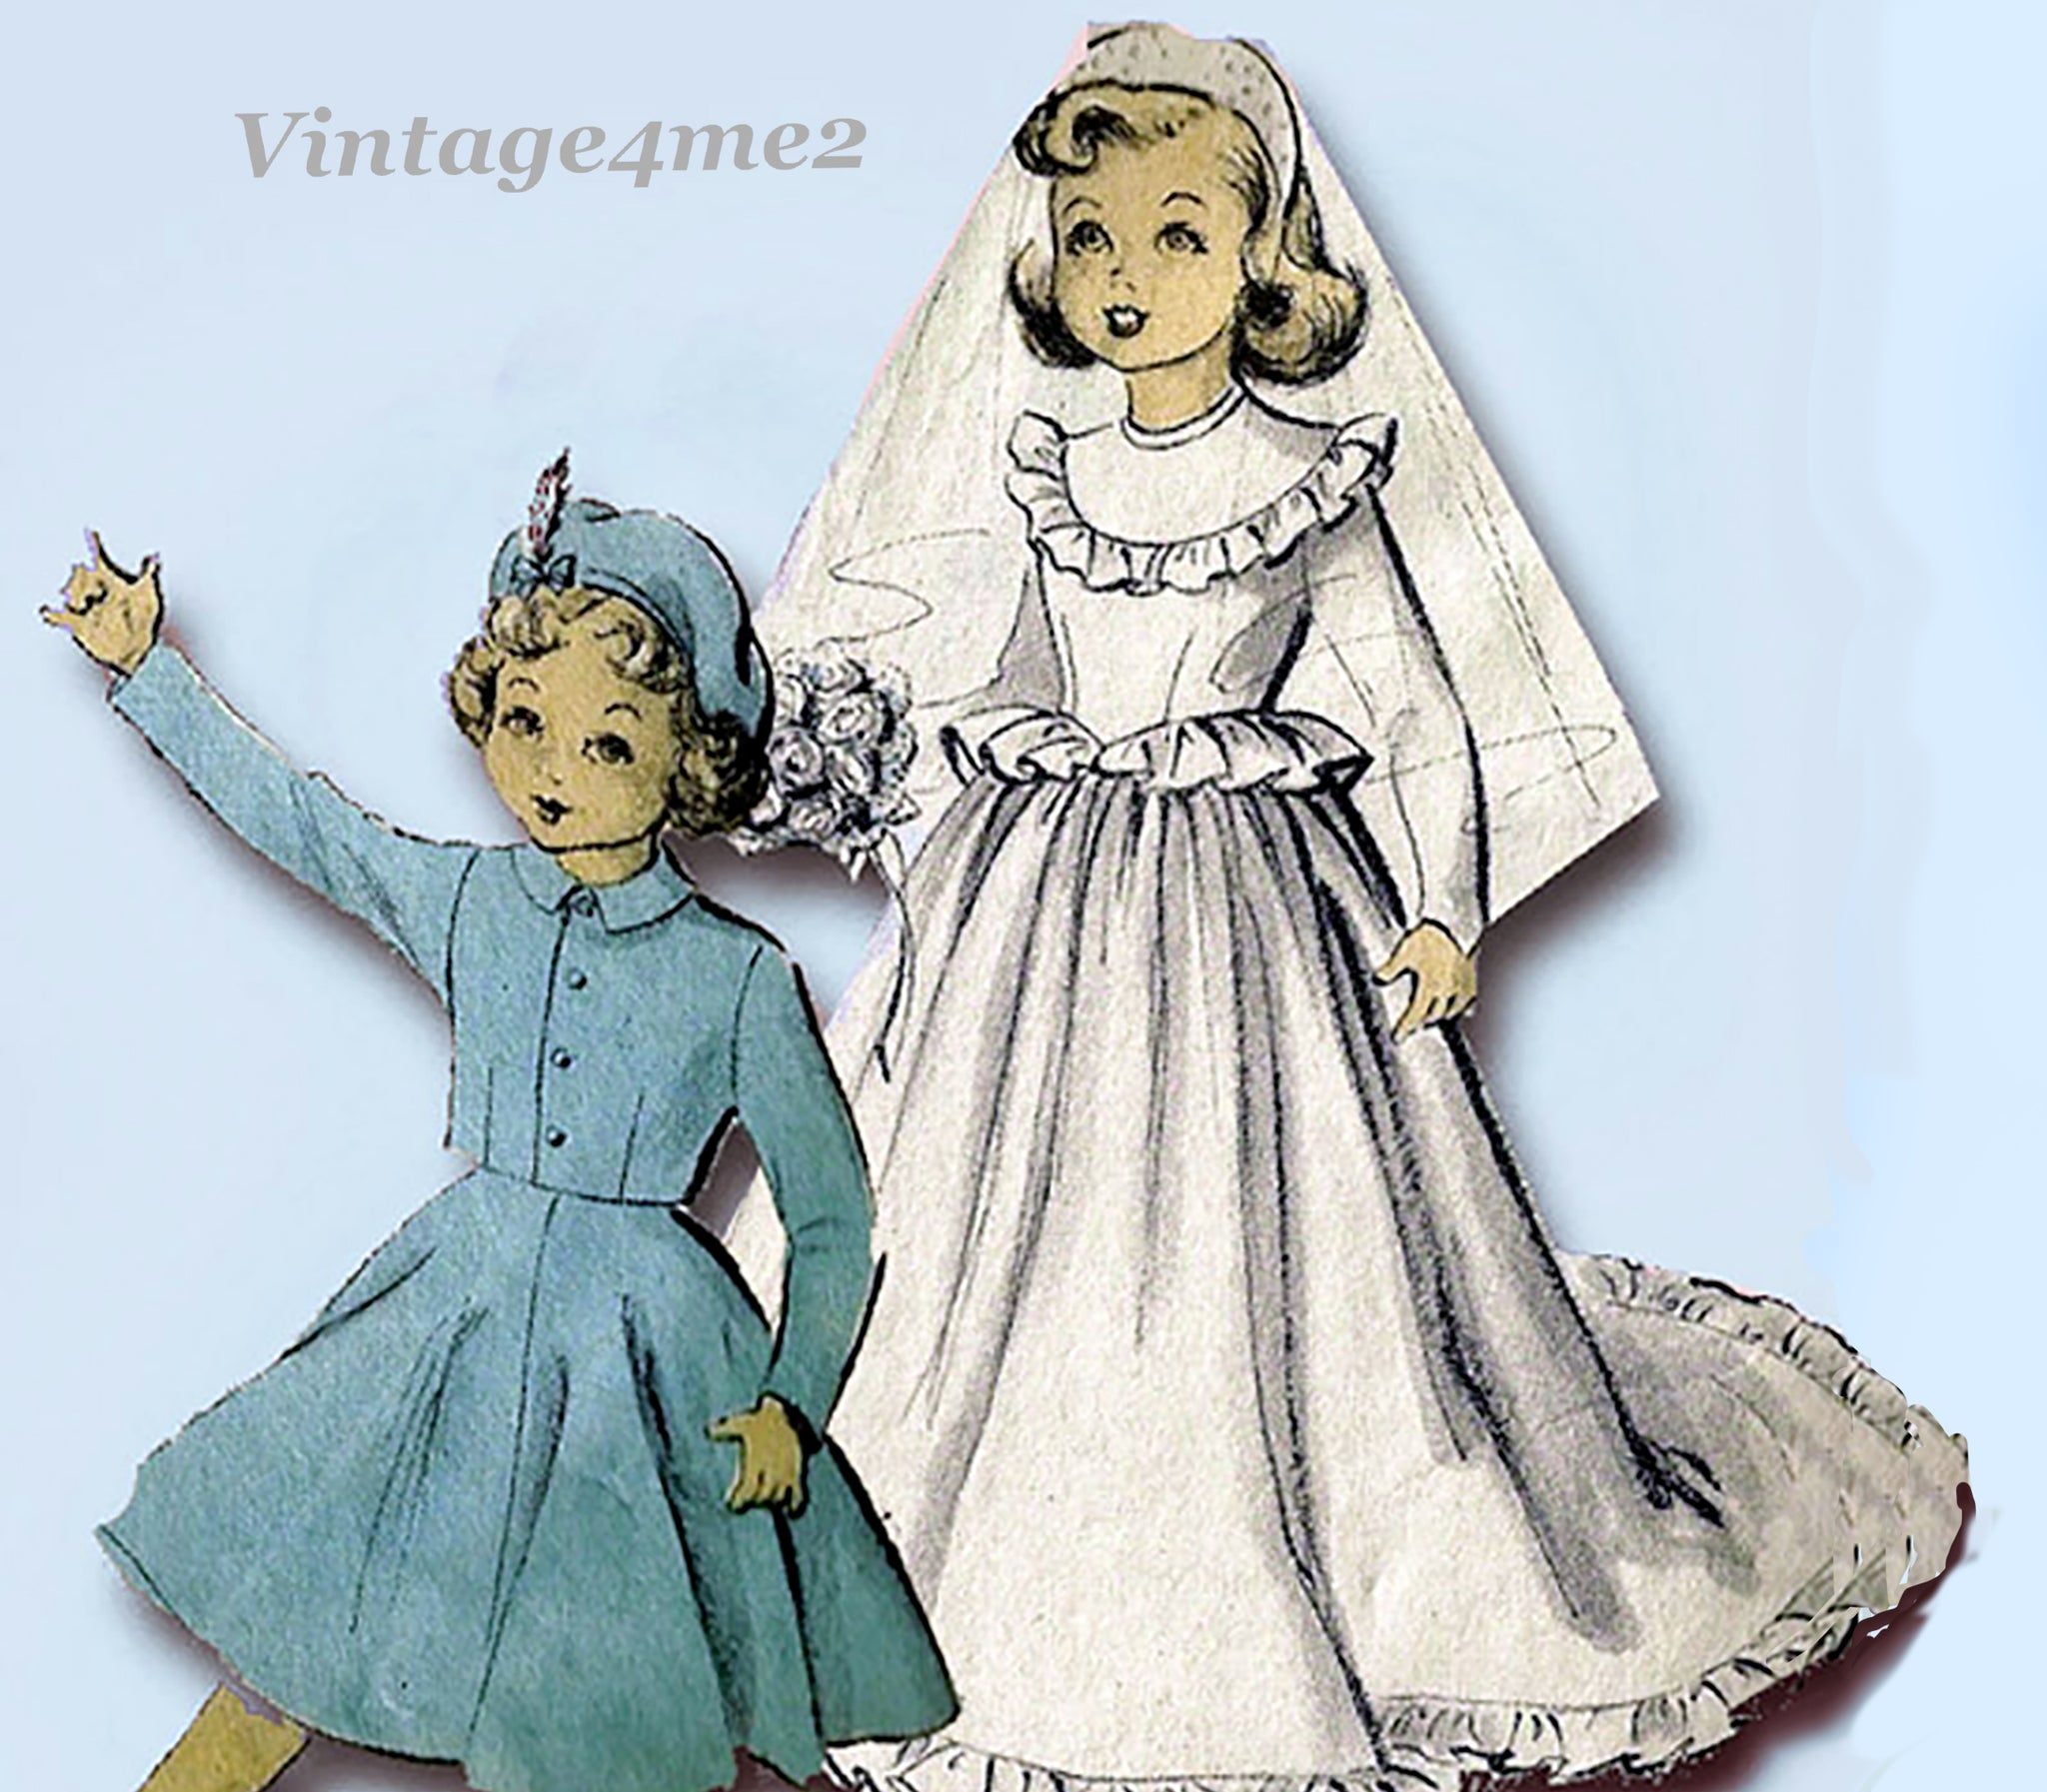 Child's Doll, Alice in Wonderland Doll, 1940s Vintage Sewing Pattern –  Vintage Sewing Pattern Company